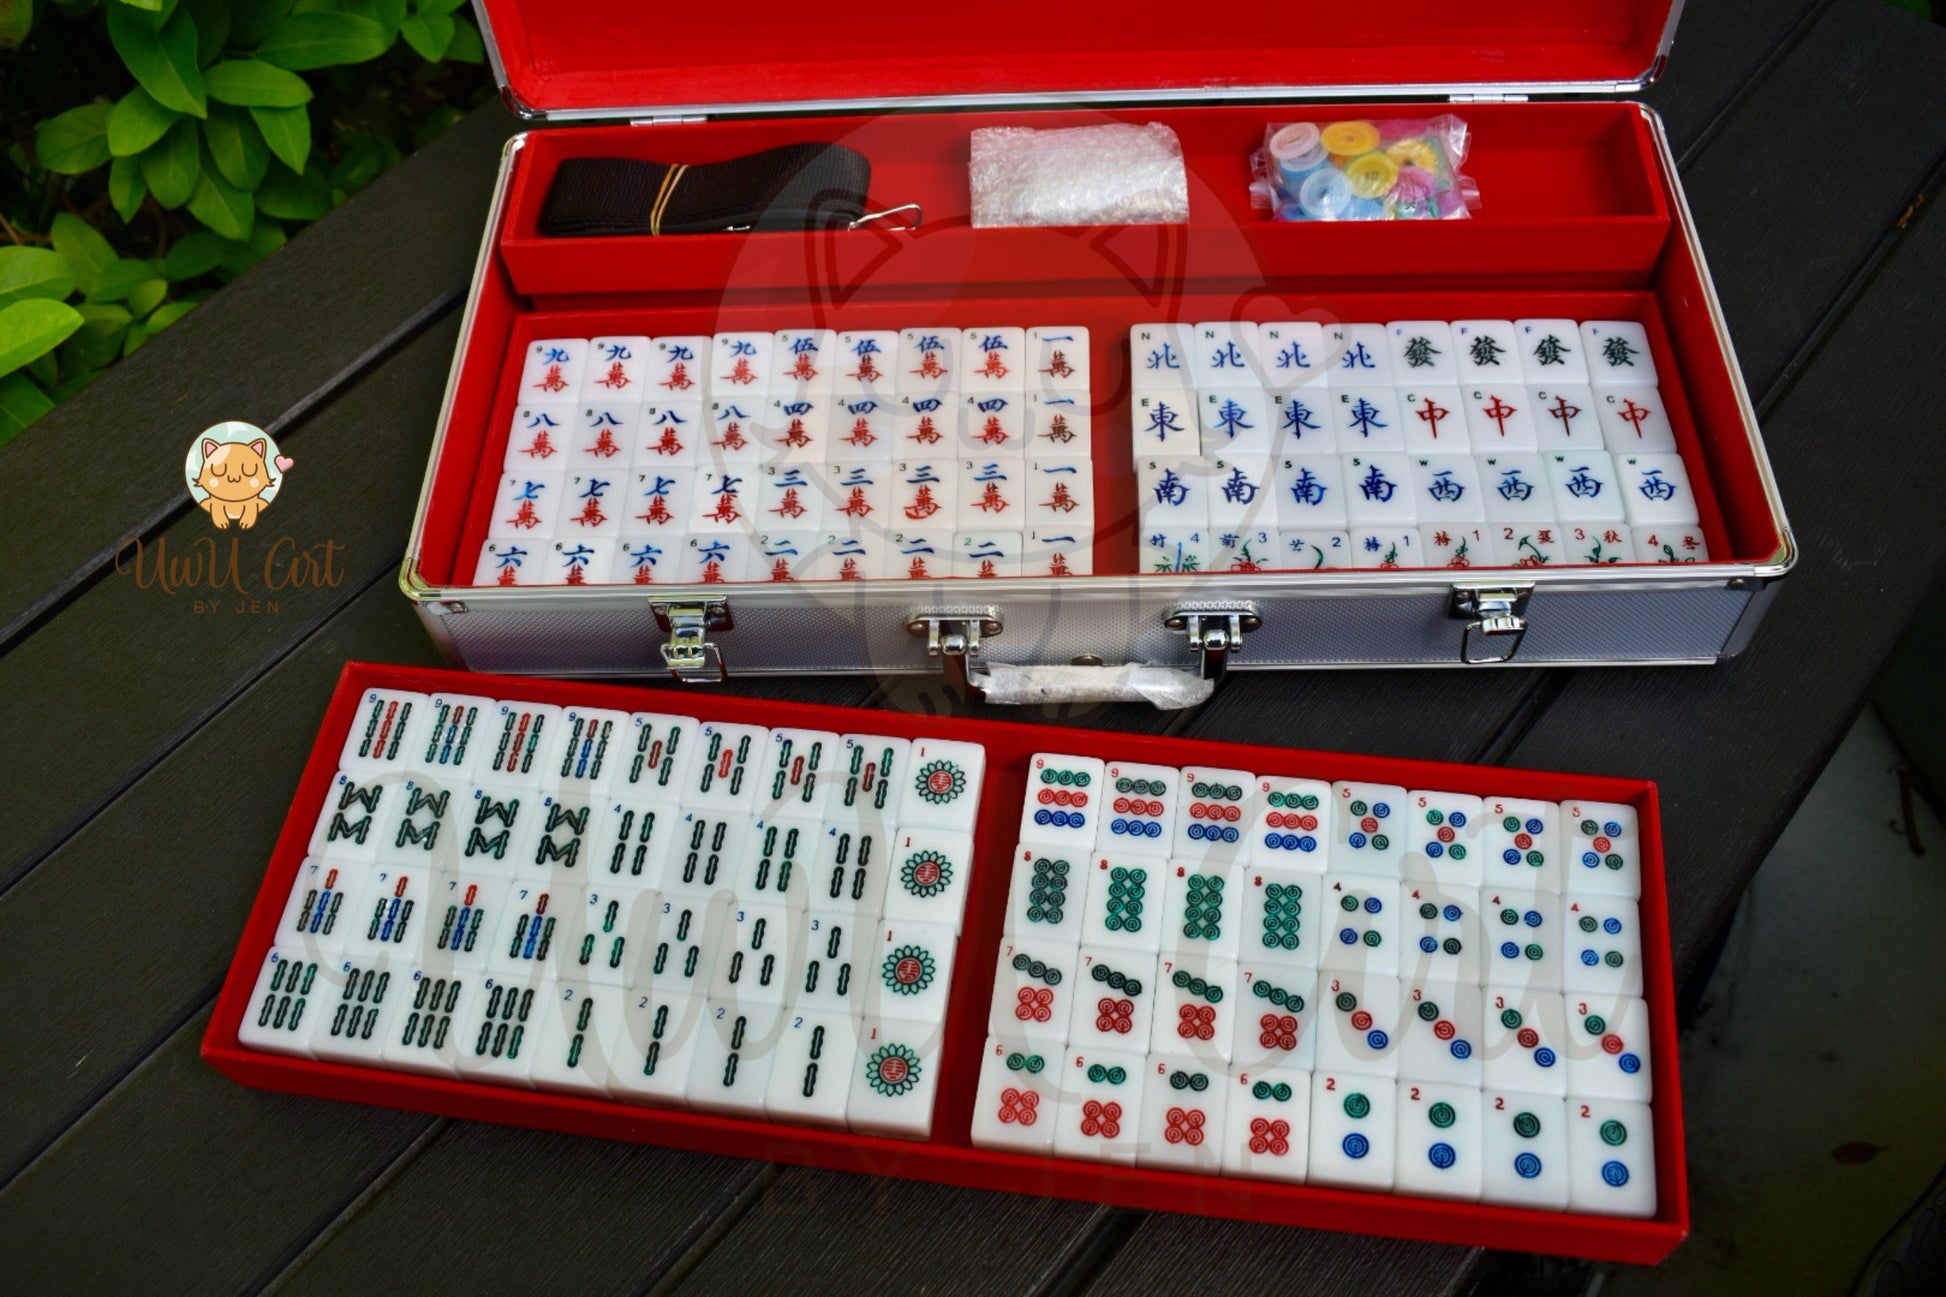 CUSTOMIZABLE Mahjong gift set - Personalized Mahjong game – UwU